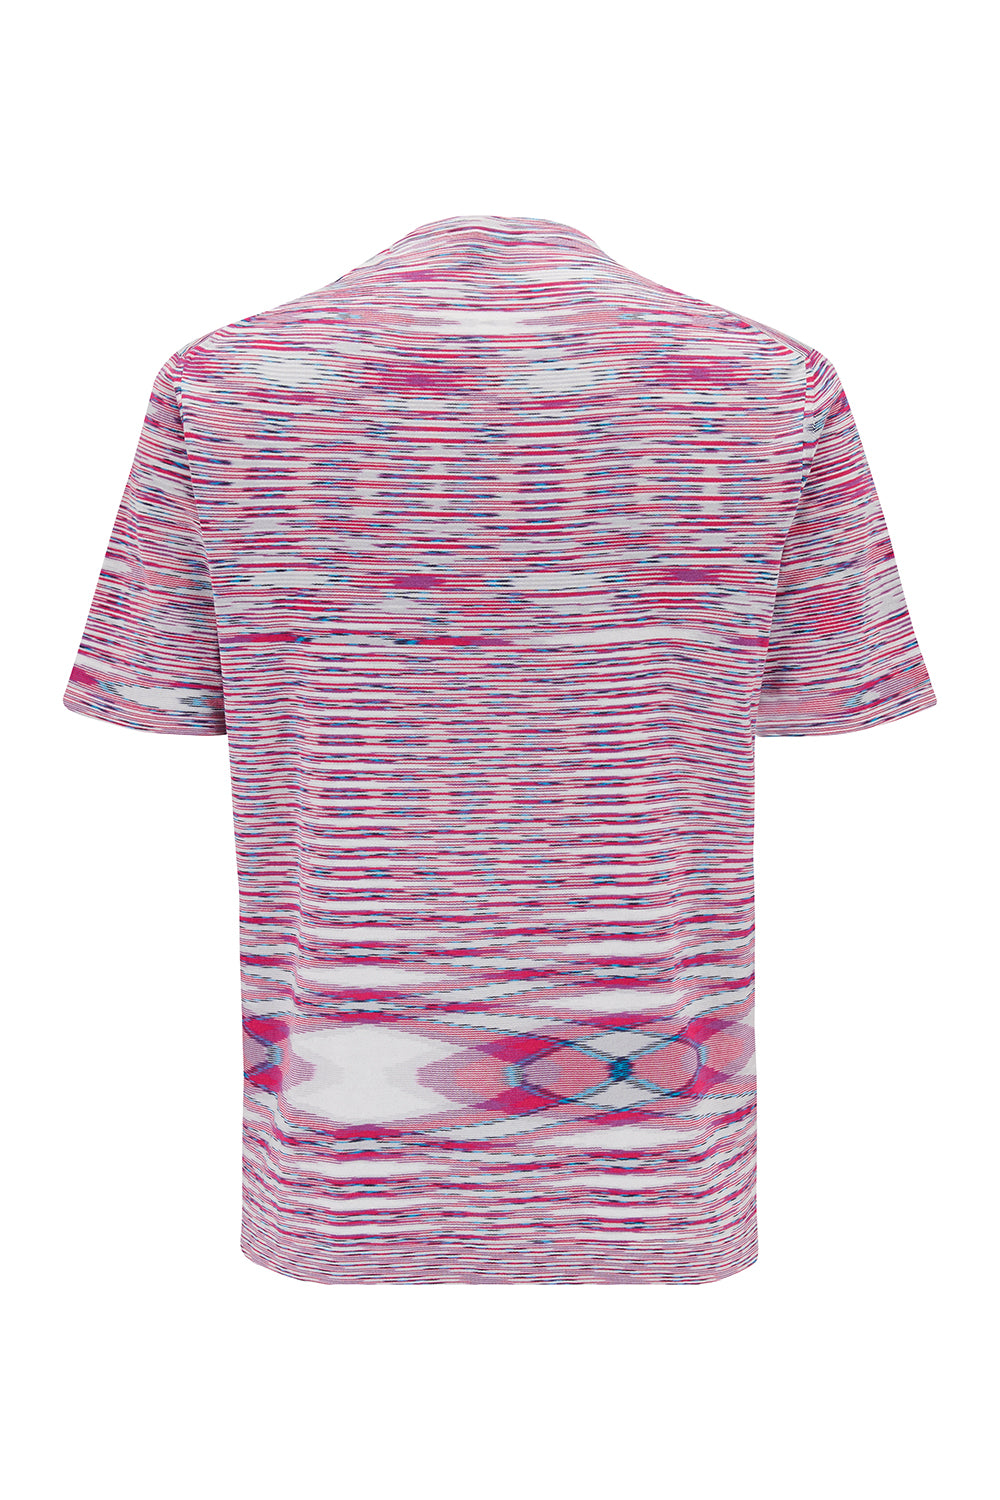 Missoni Men’s Crew-Neck T-shirt Pink - Back View